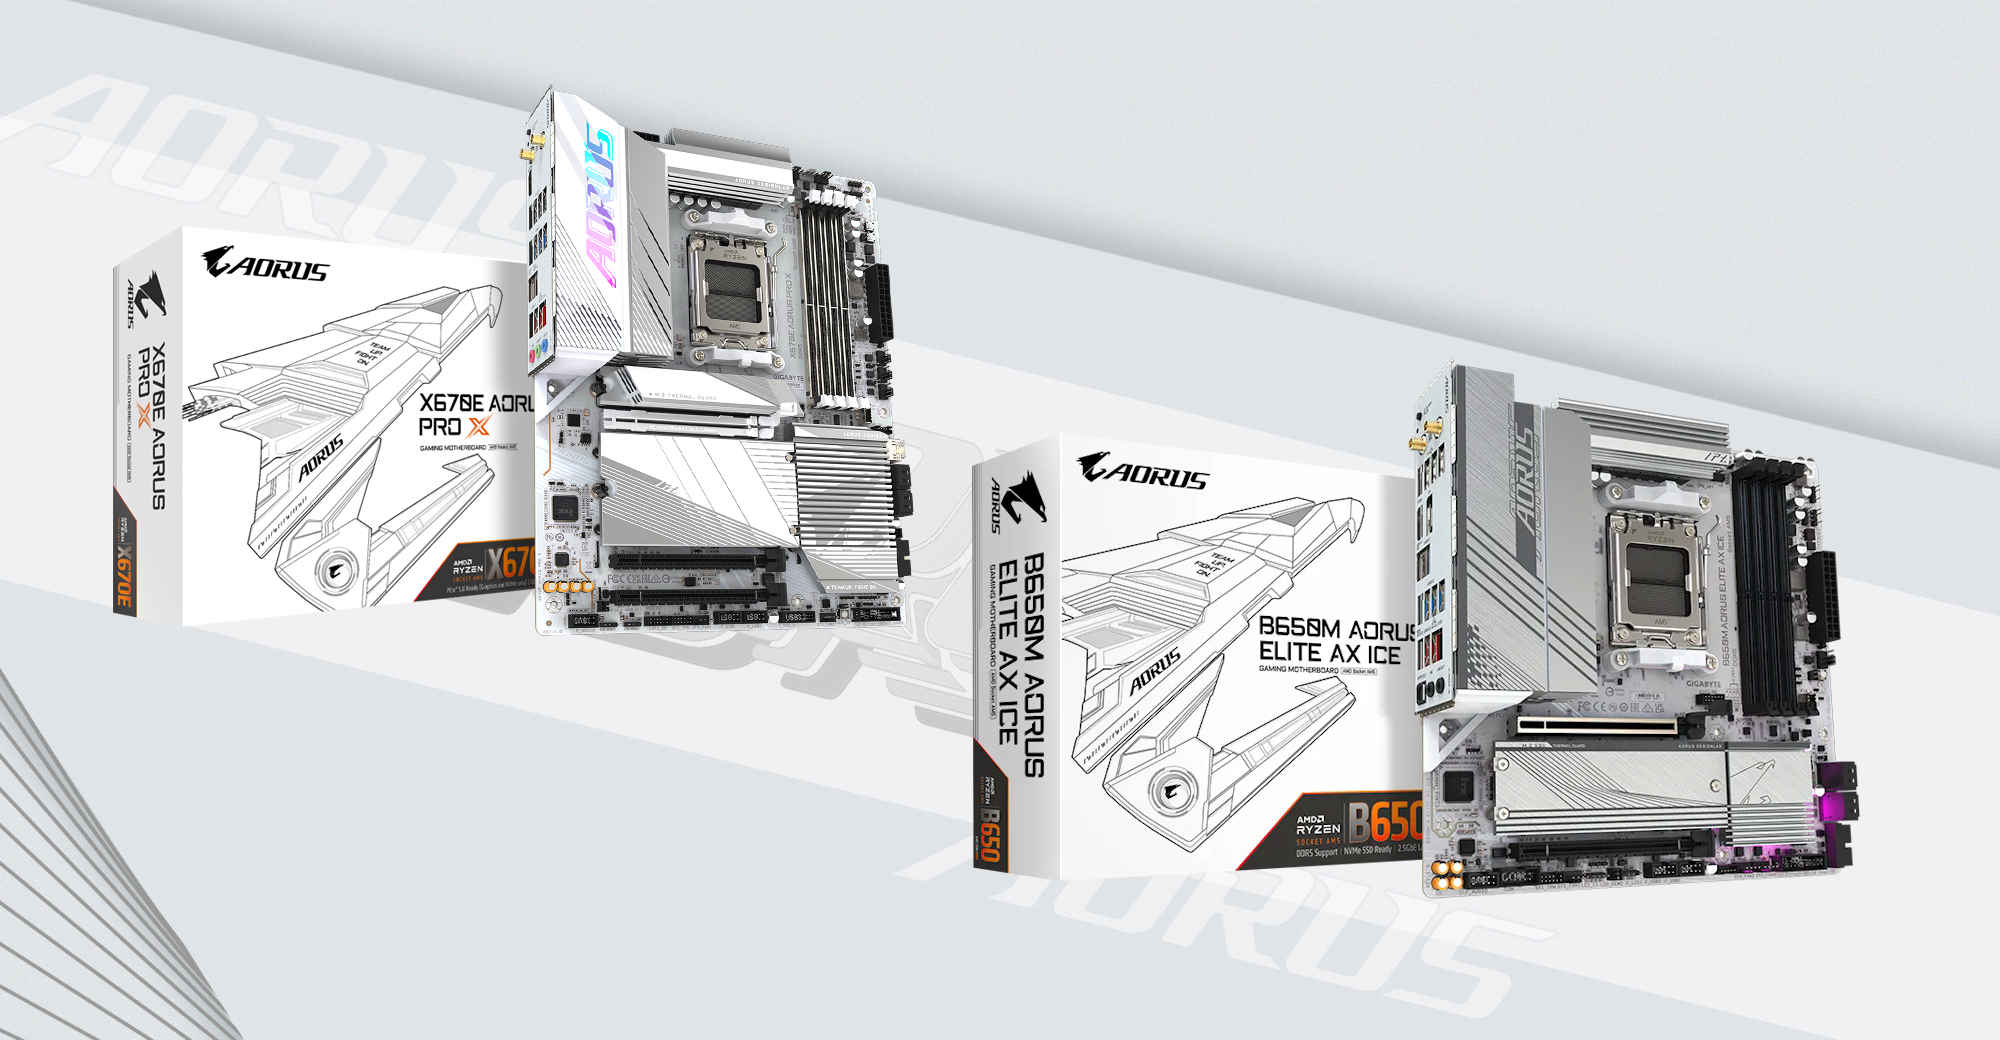 Gigabyte launches stylish white AMD X670/B650 AORUS motherboards